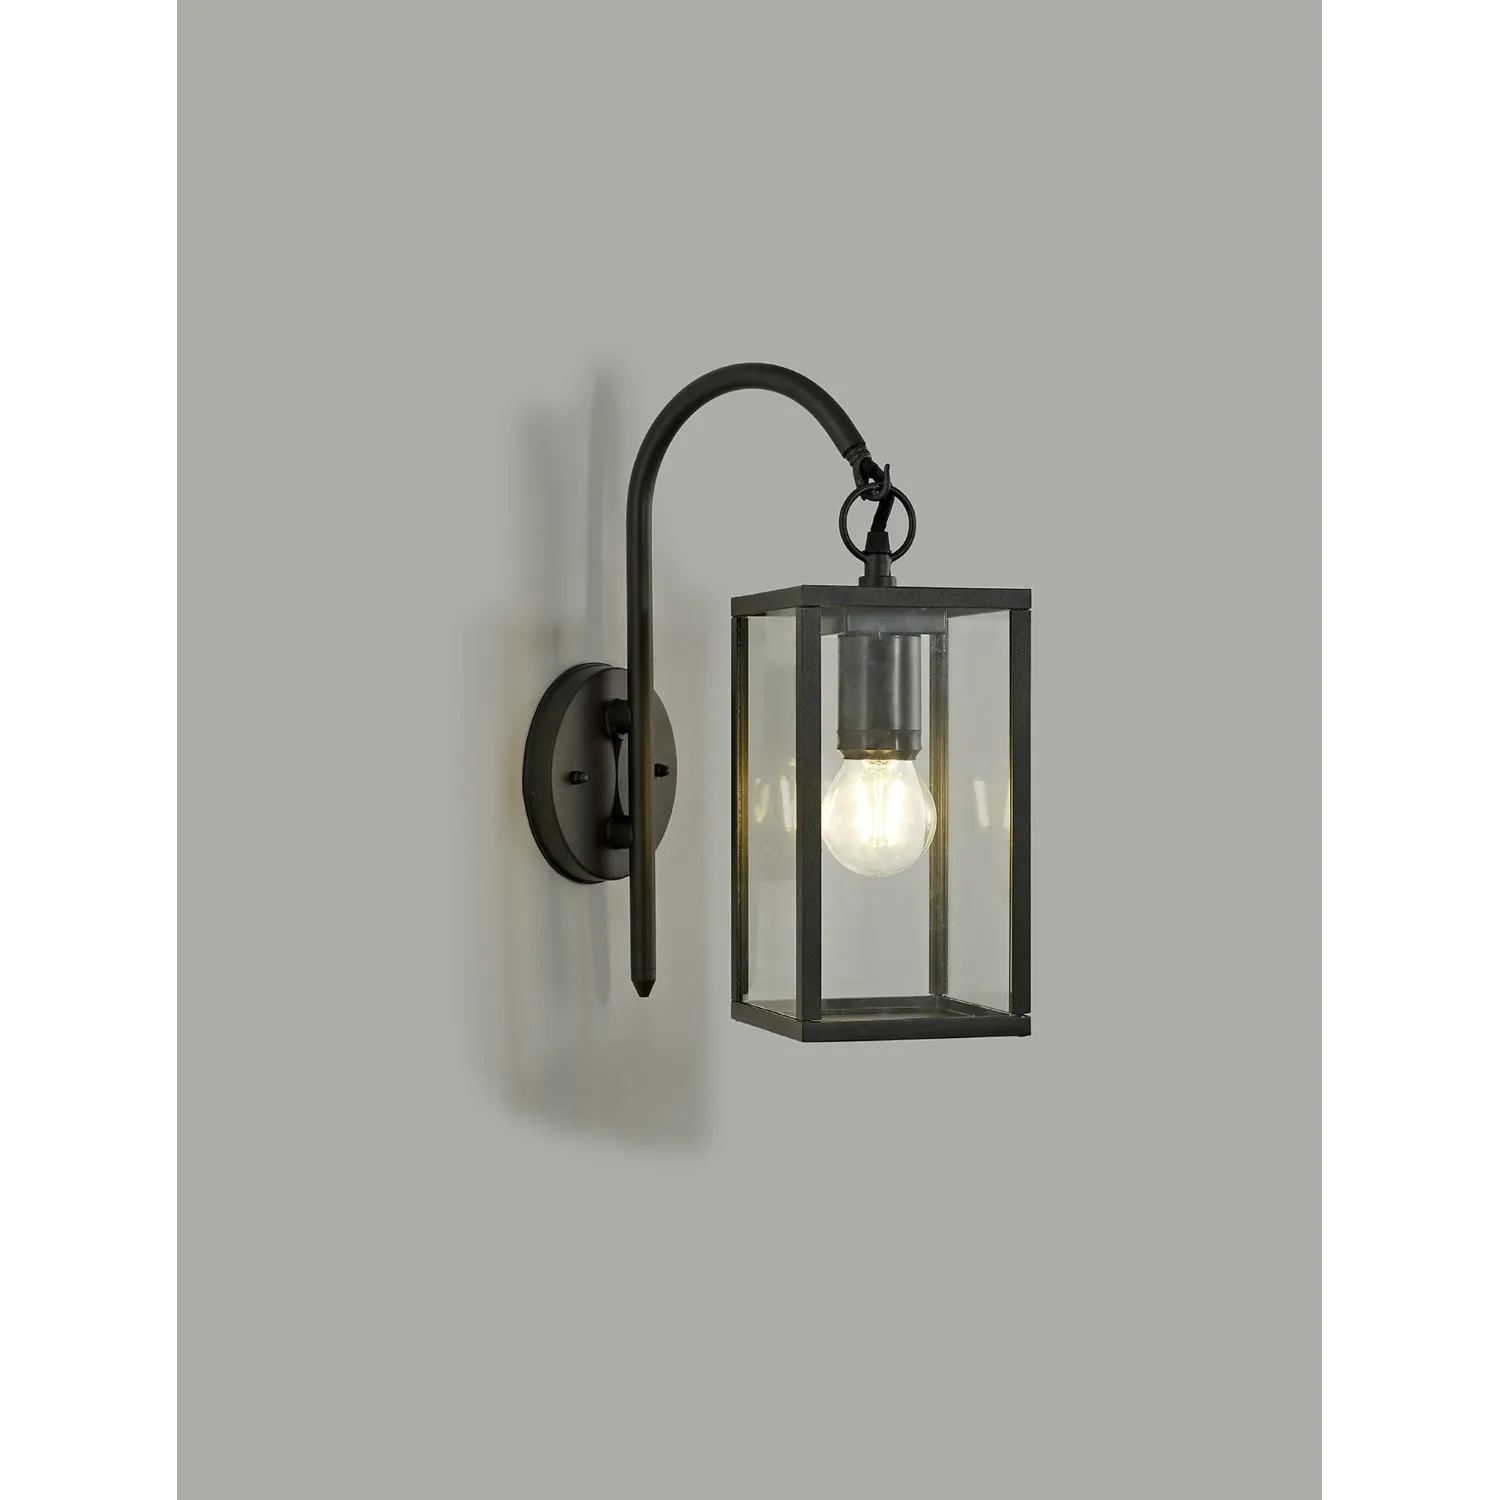 Hounslow Downward Wall Lamp, 1 x E27, IP54, Graphite Black, 2yrs Warranty